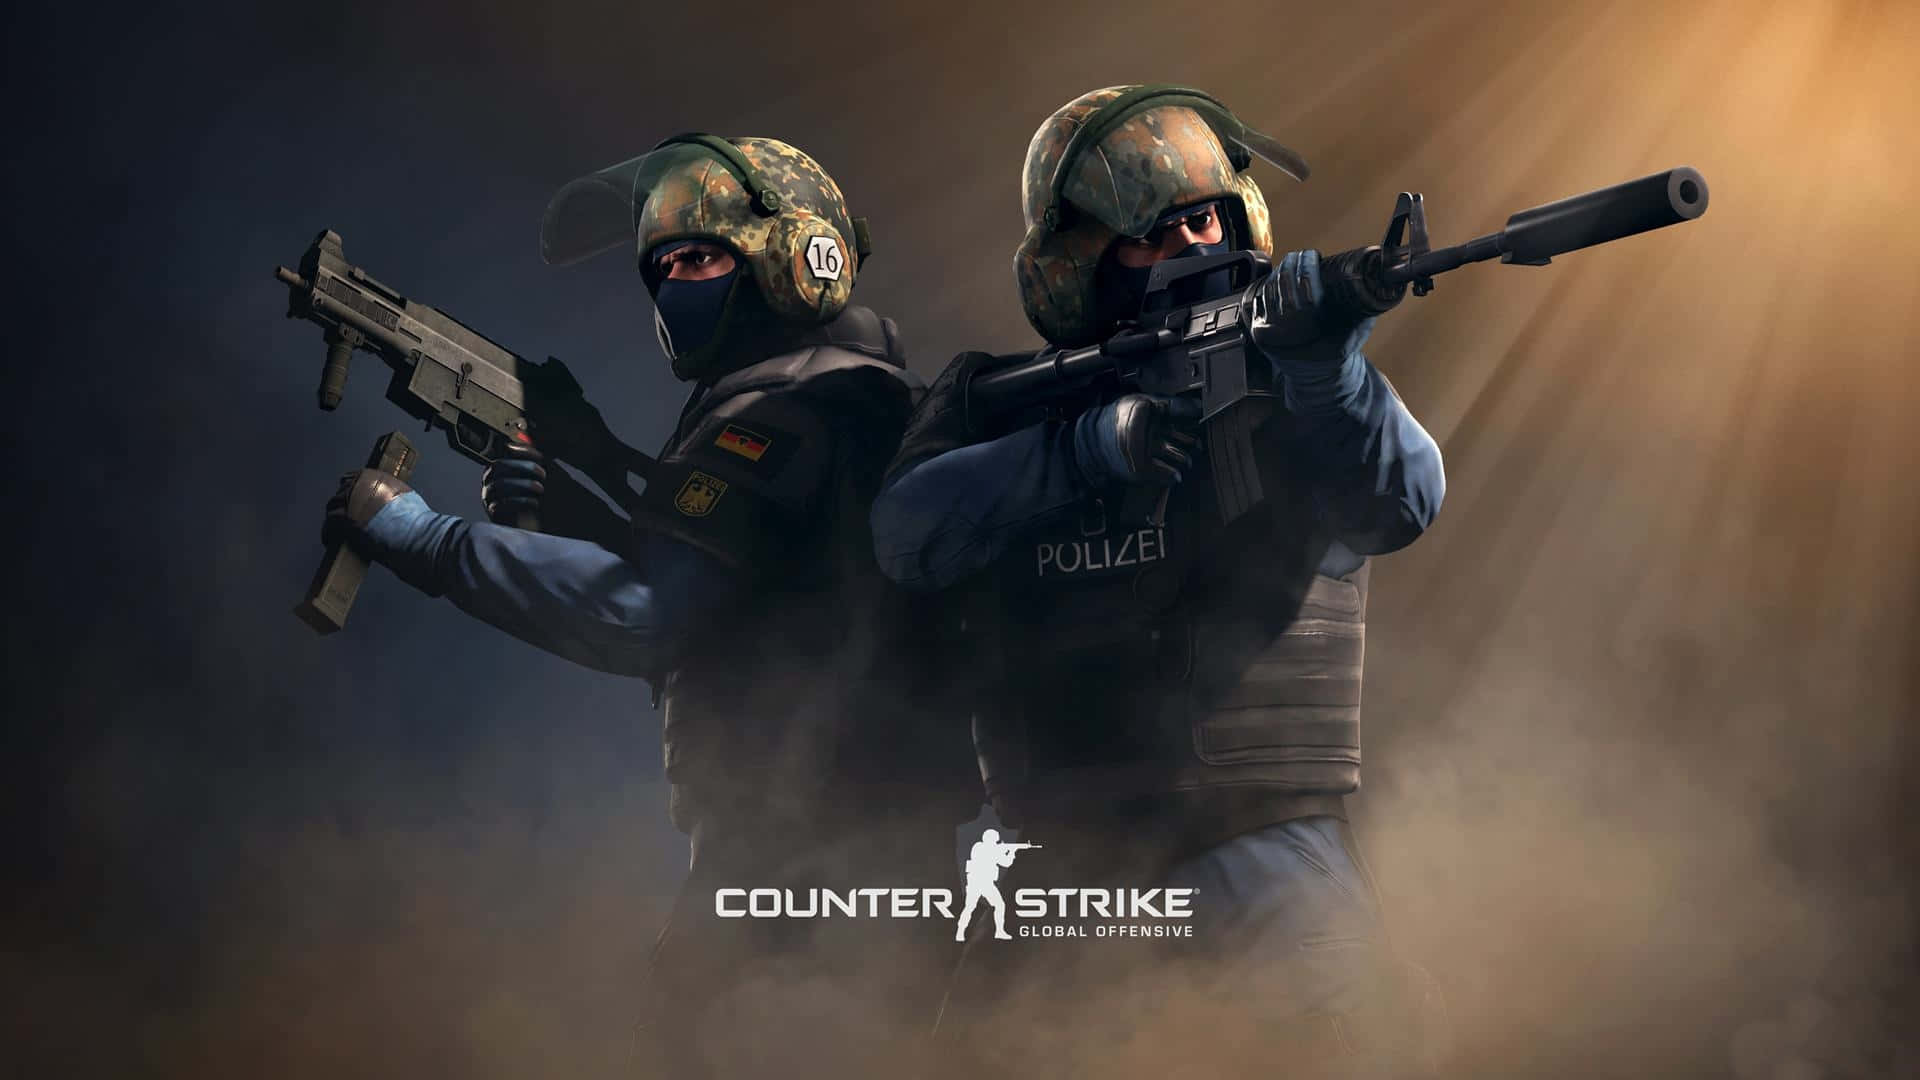 Free Counter Strike Global Offensive Desktop Wallpaper Downloads, [100+]  Counter Strike Global Offensive Desktop Wallpapers for FREE 